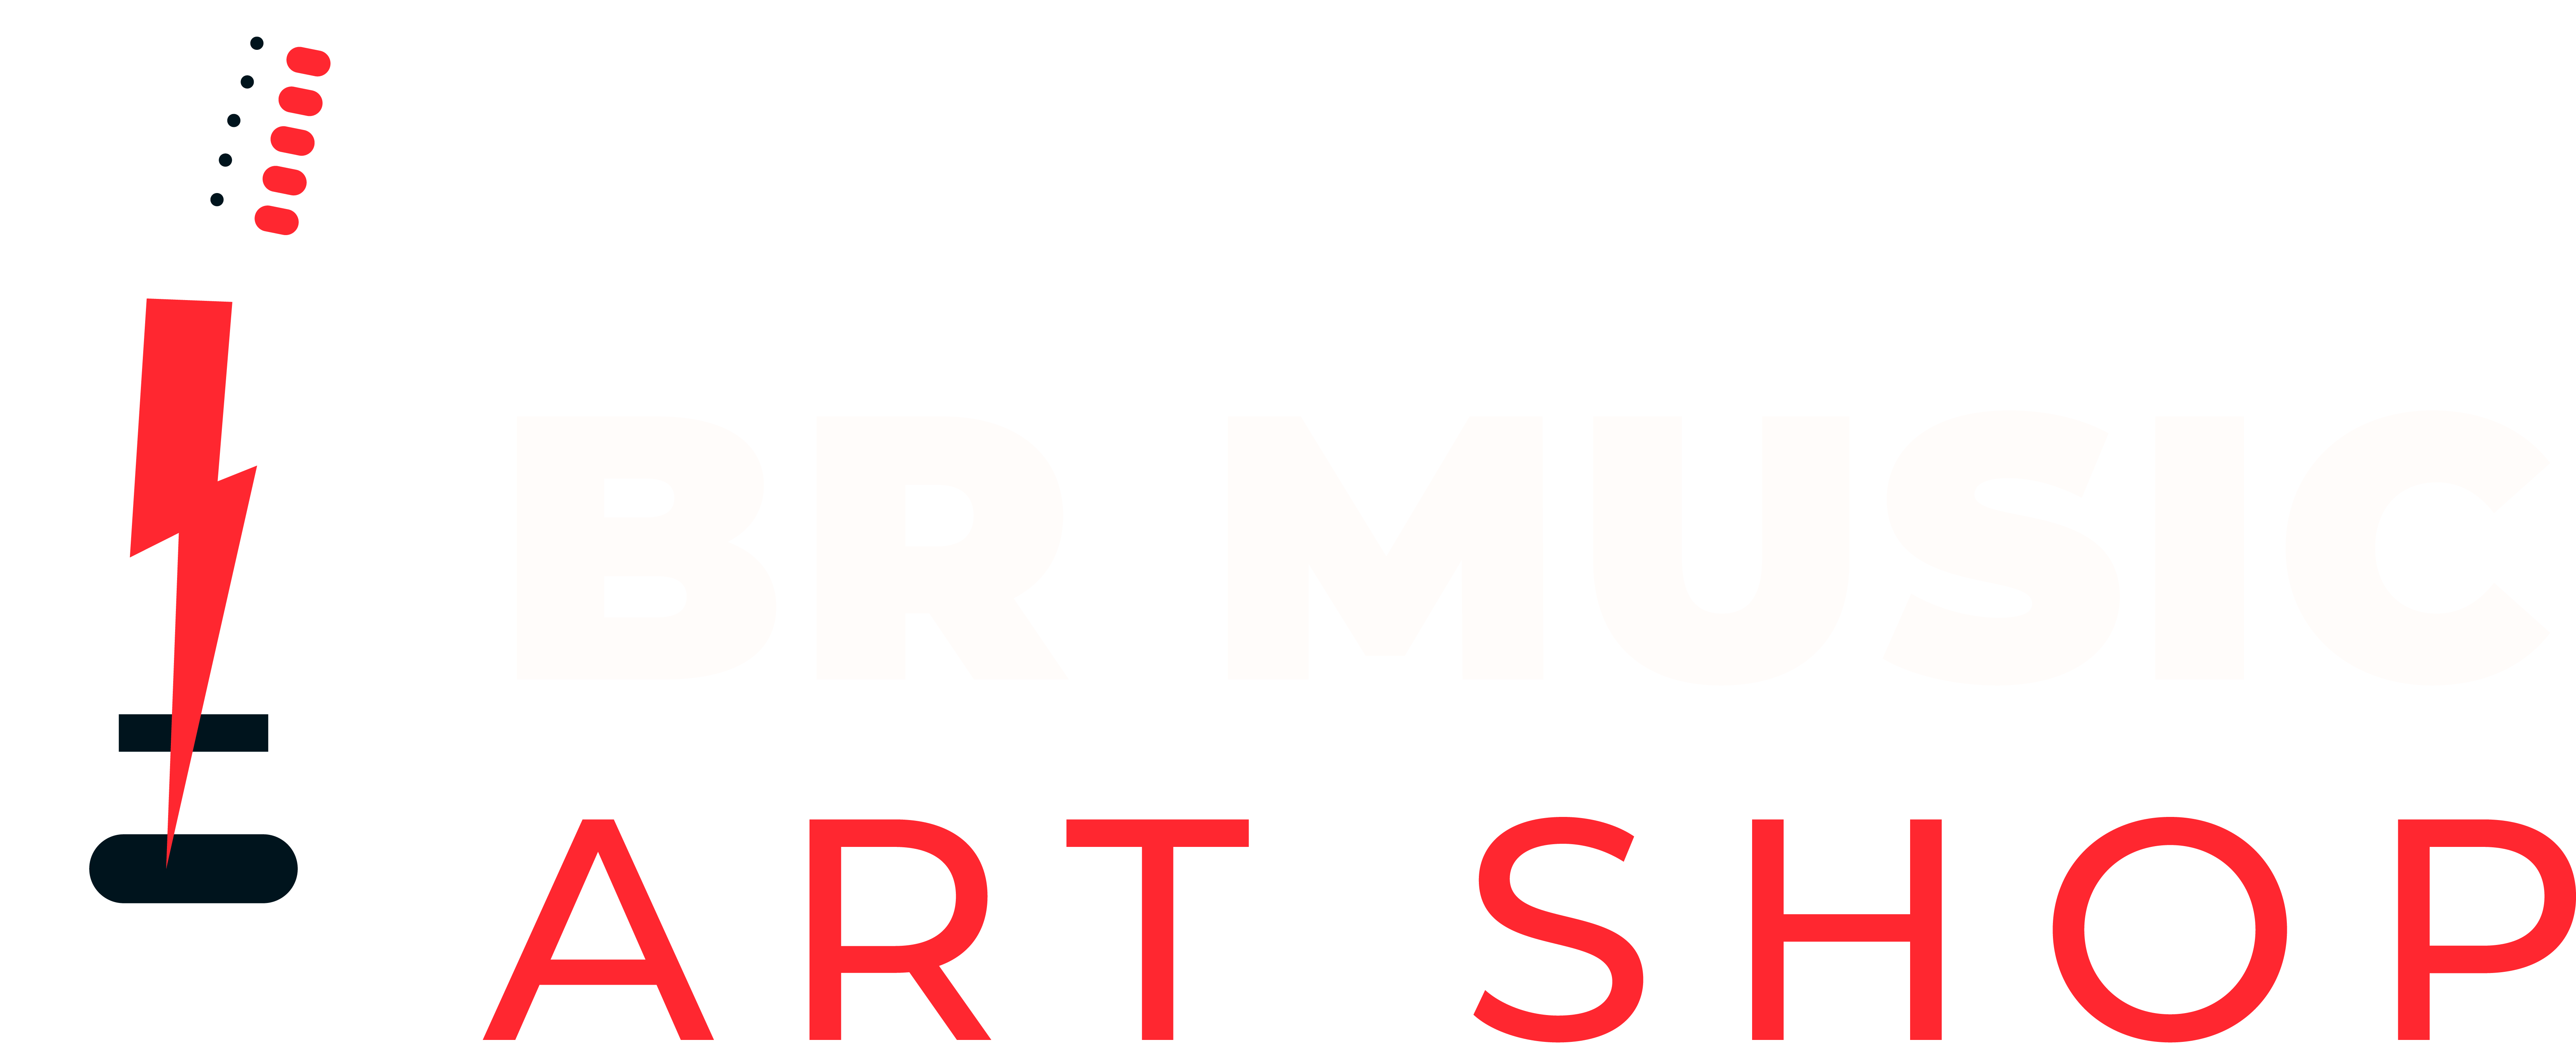 BR Music Art Shop